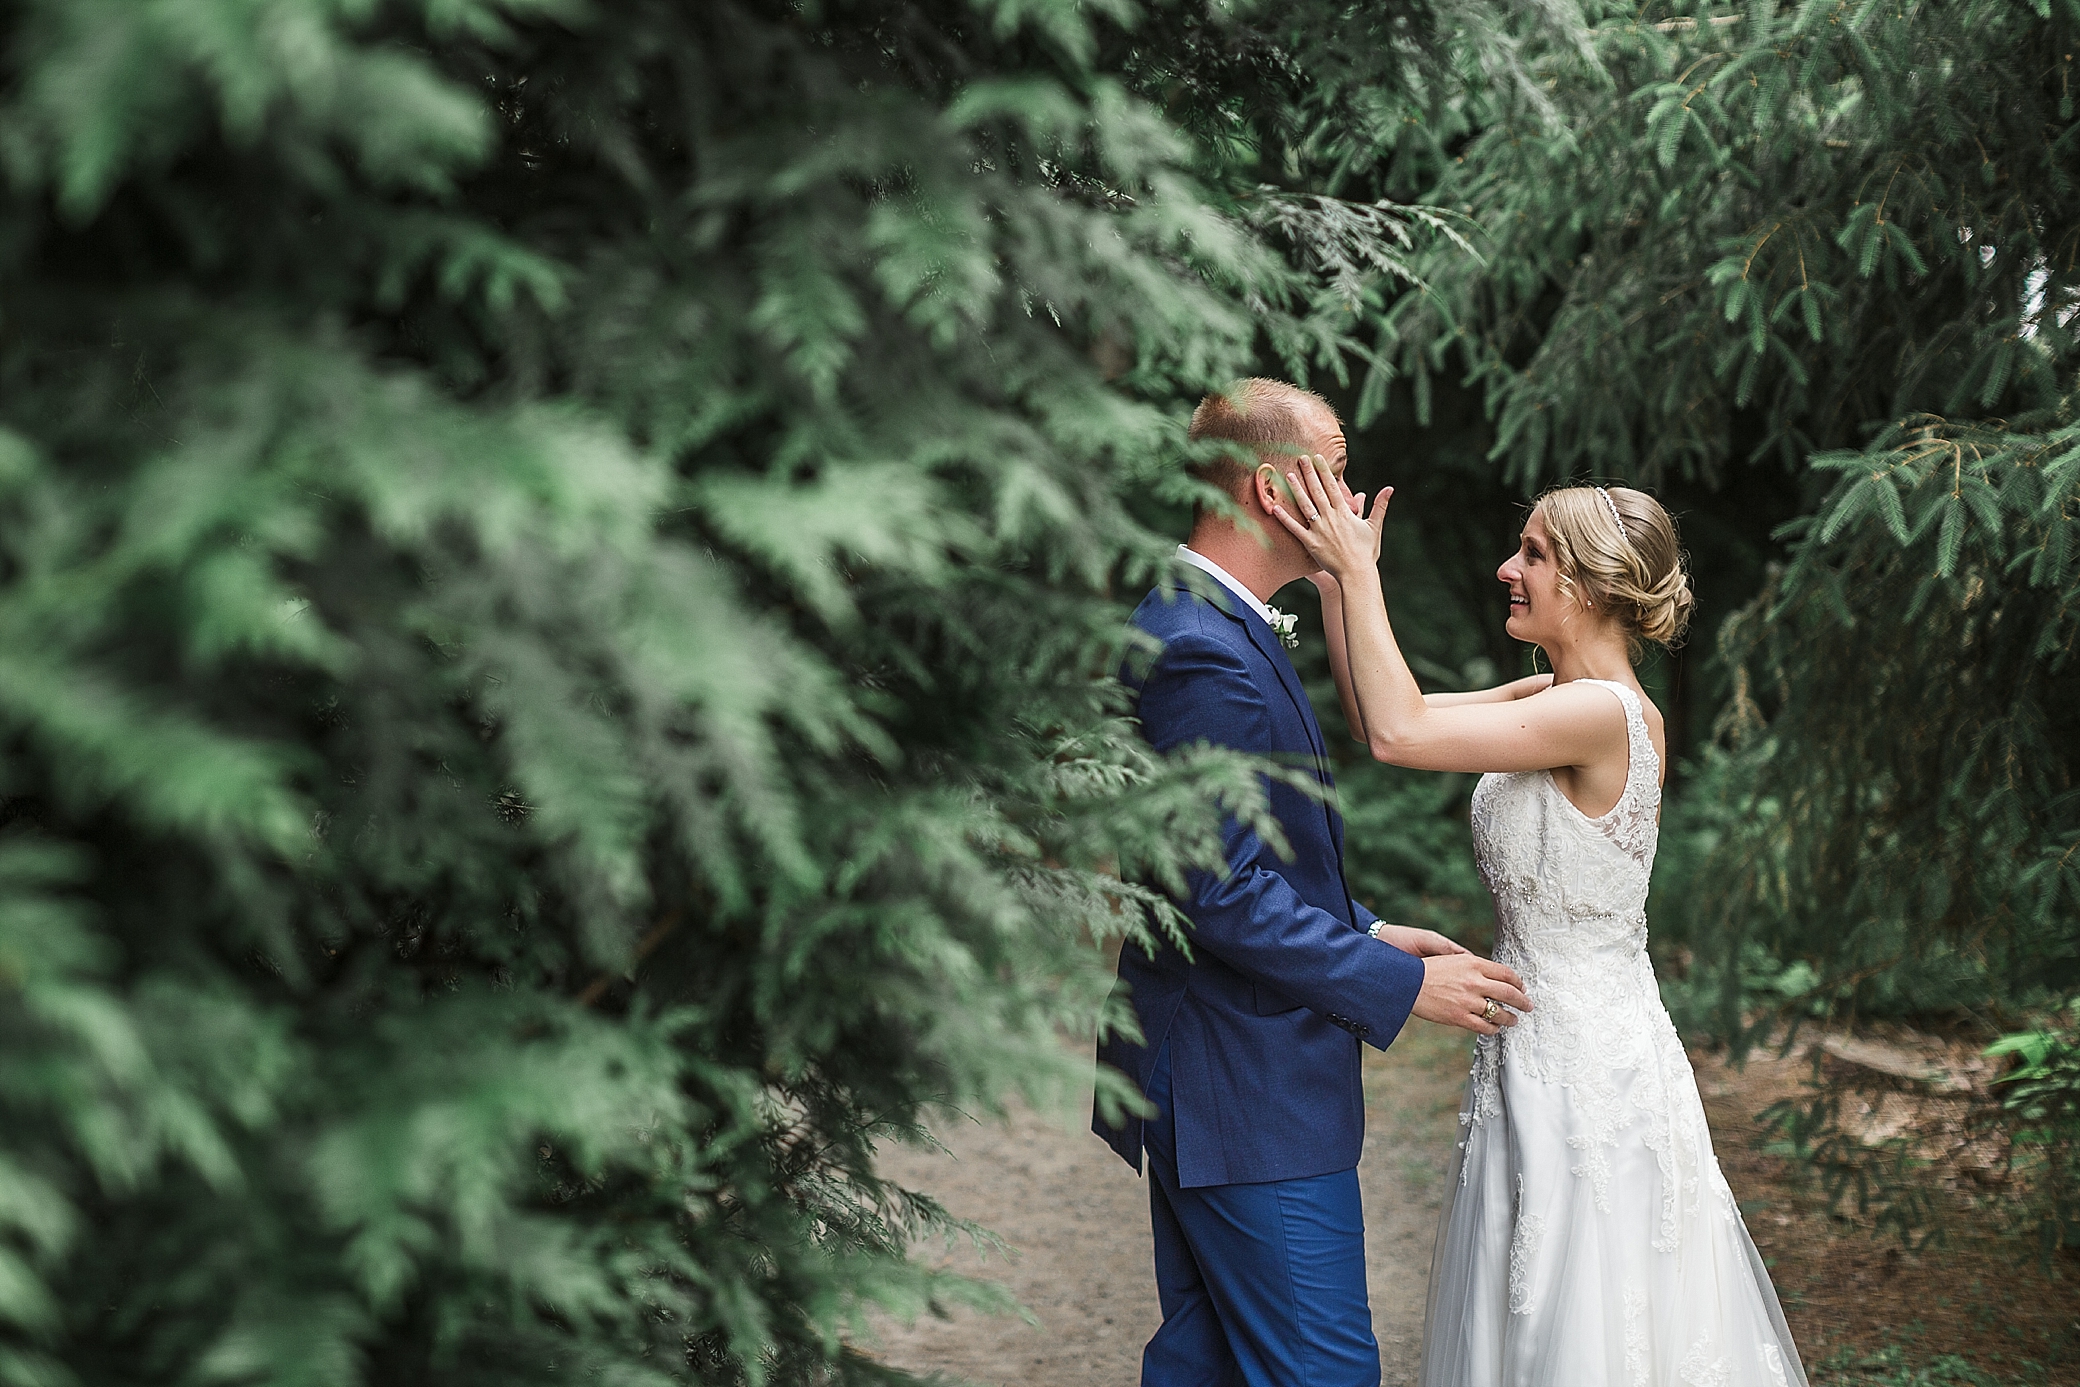 Bride and groom wedding portraits | Megan Montalvo Photography